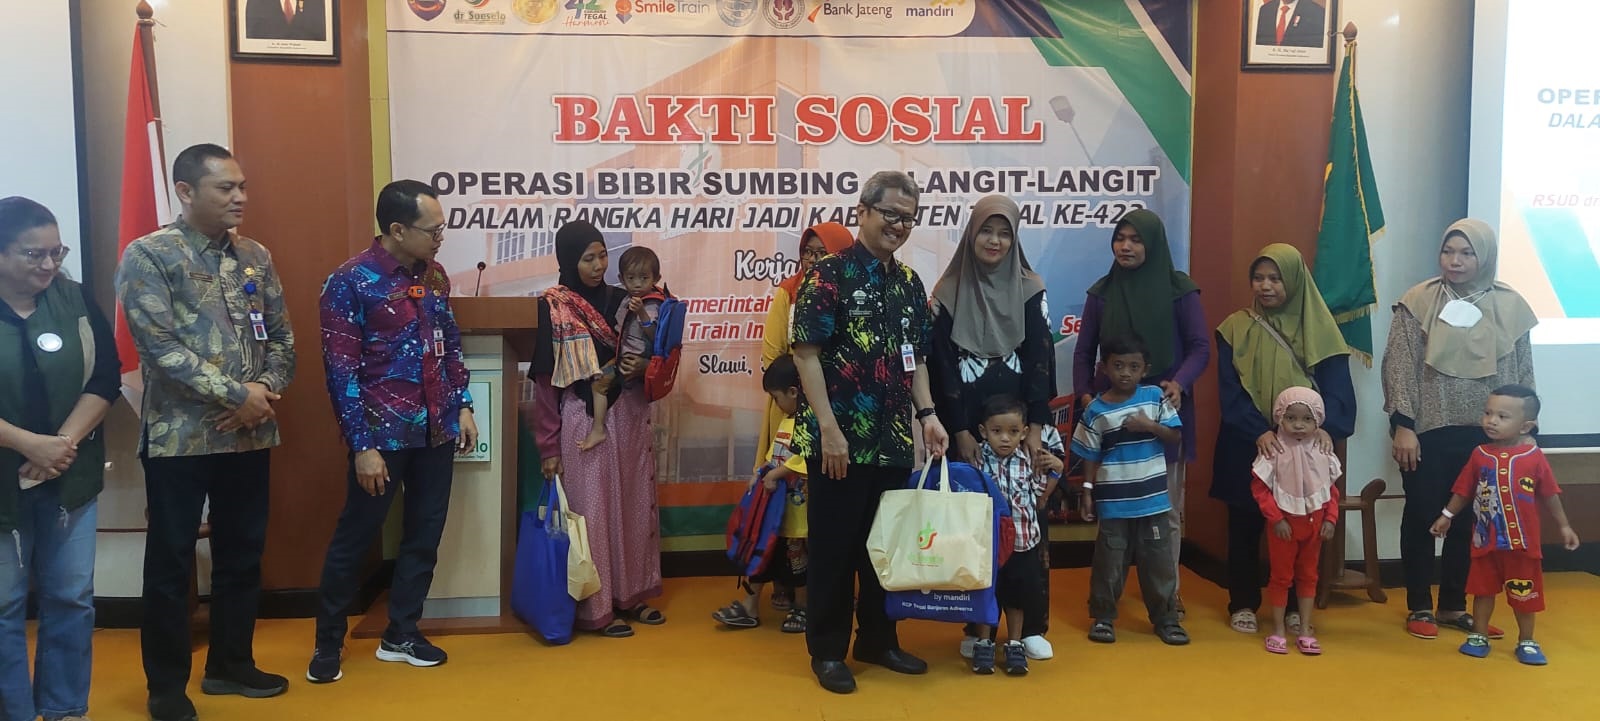 RSUD dr Soeselo Kabupaten Tegal Gelar Operasi Bibir Sumbing Gratis